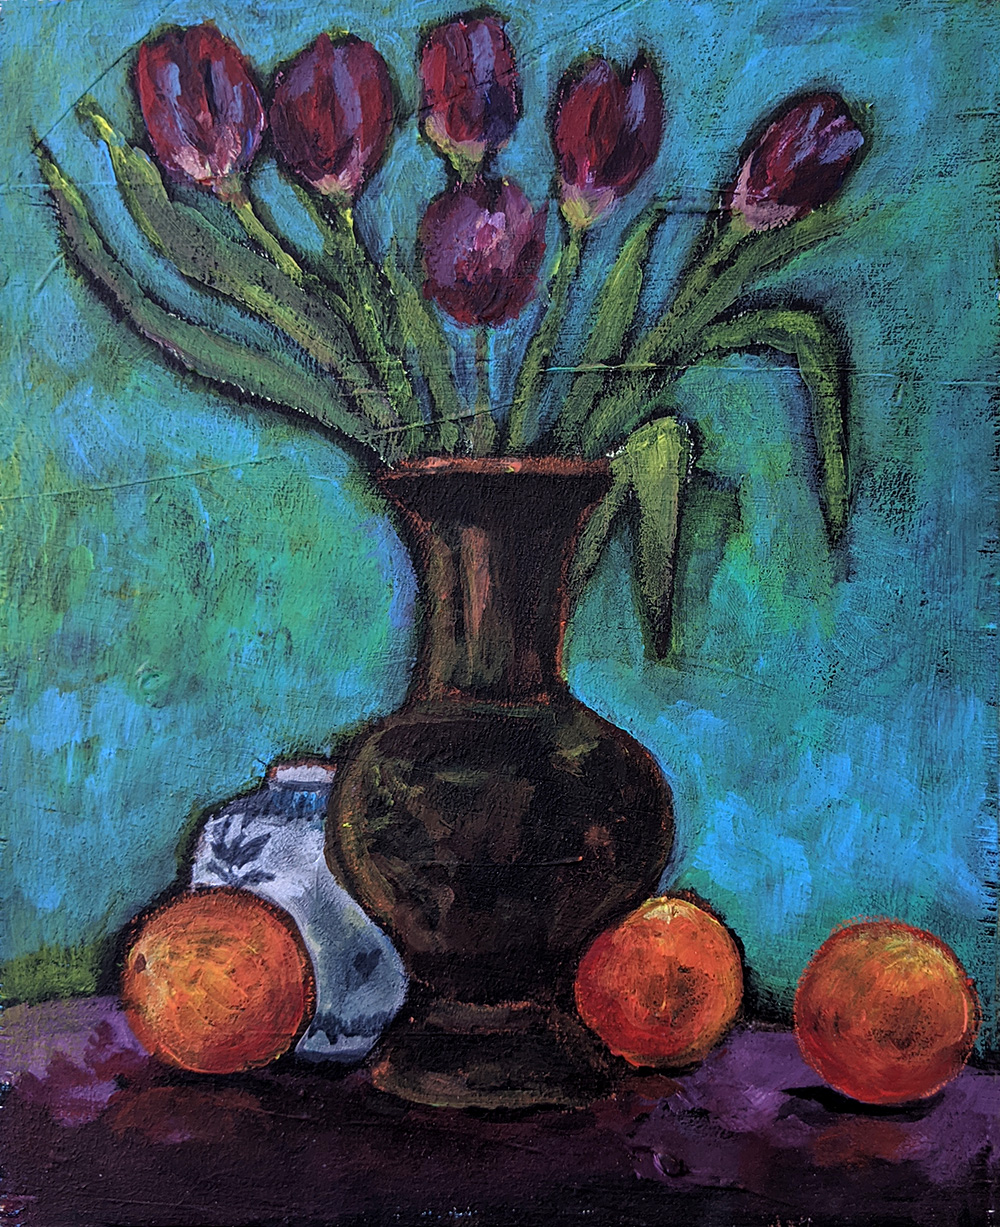 Dutch Tulips, in a Vase